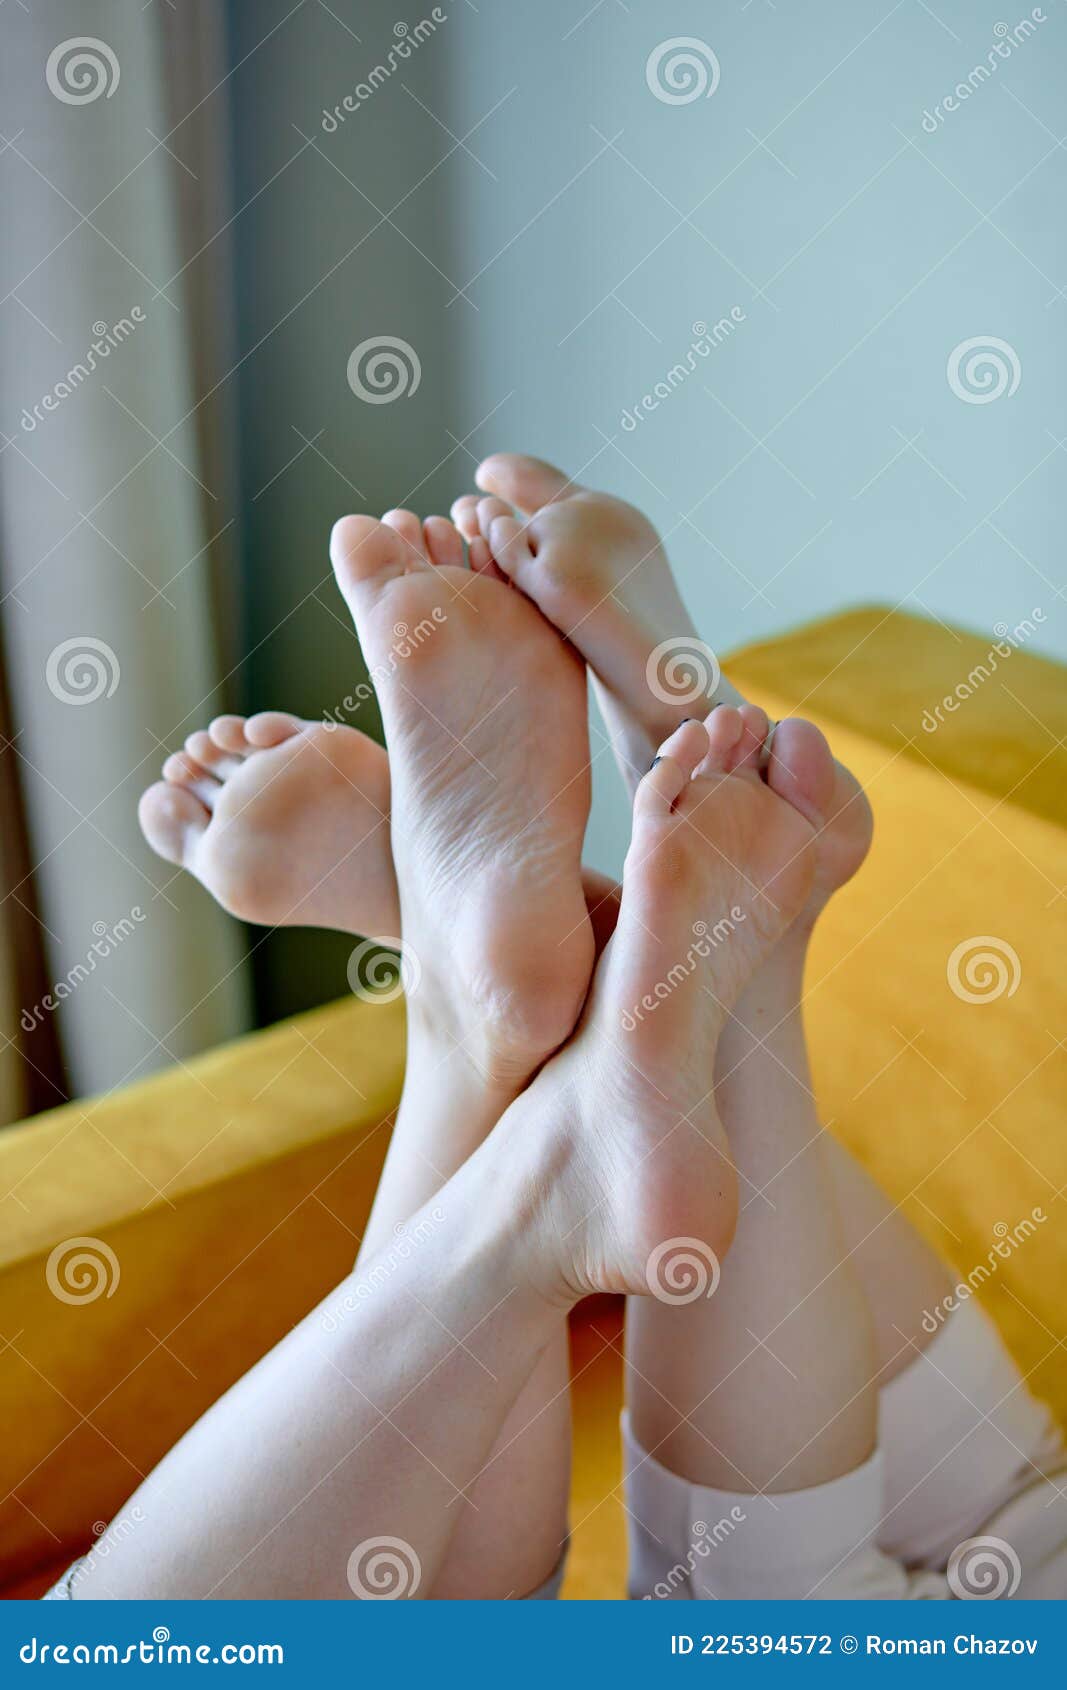 And feet lesbians Foot Kissing